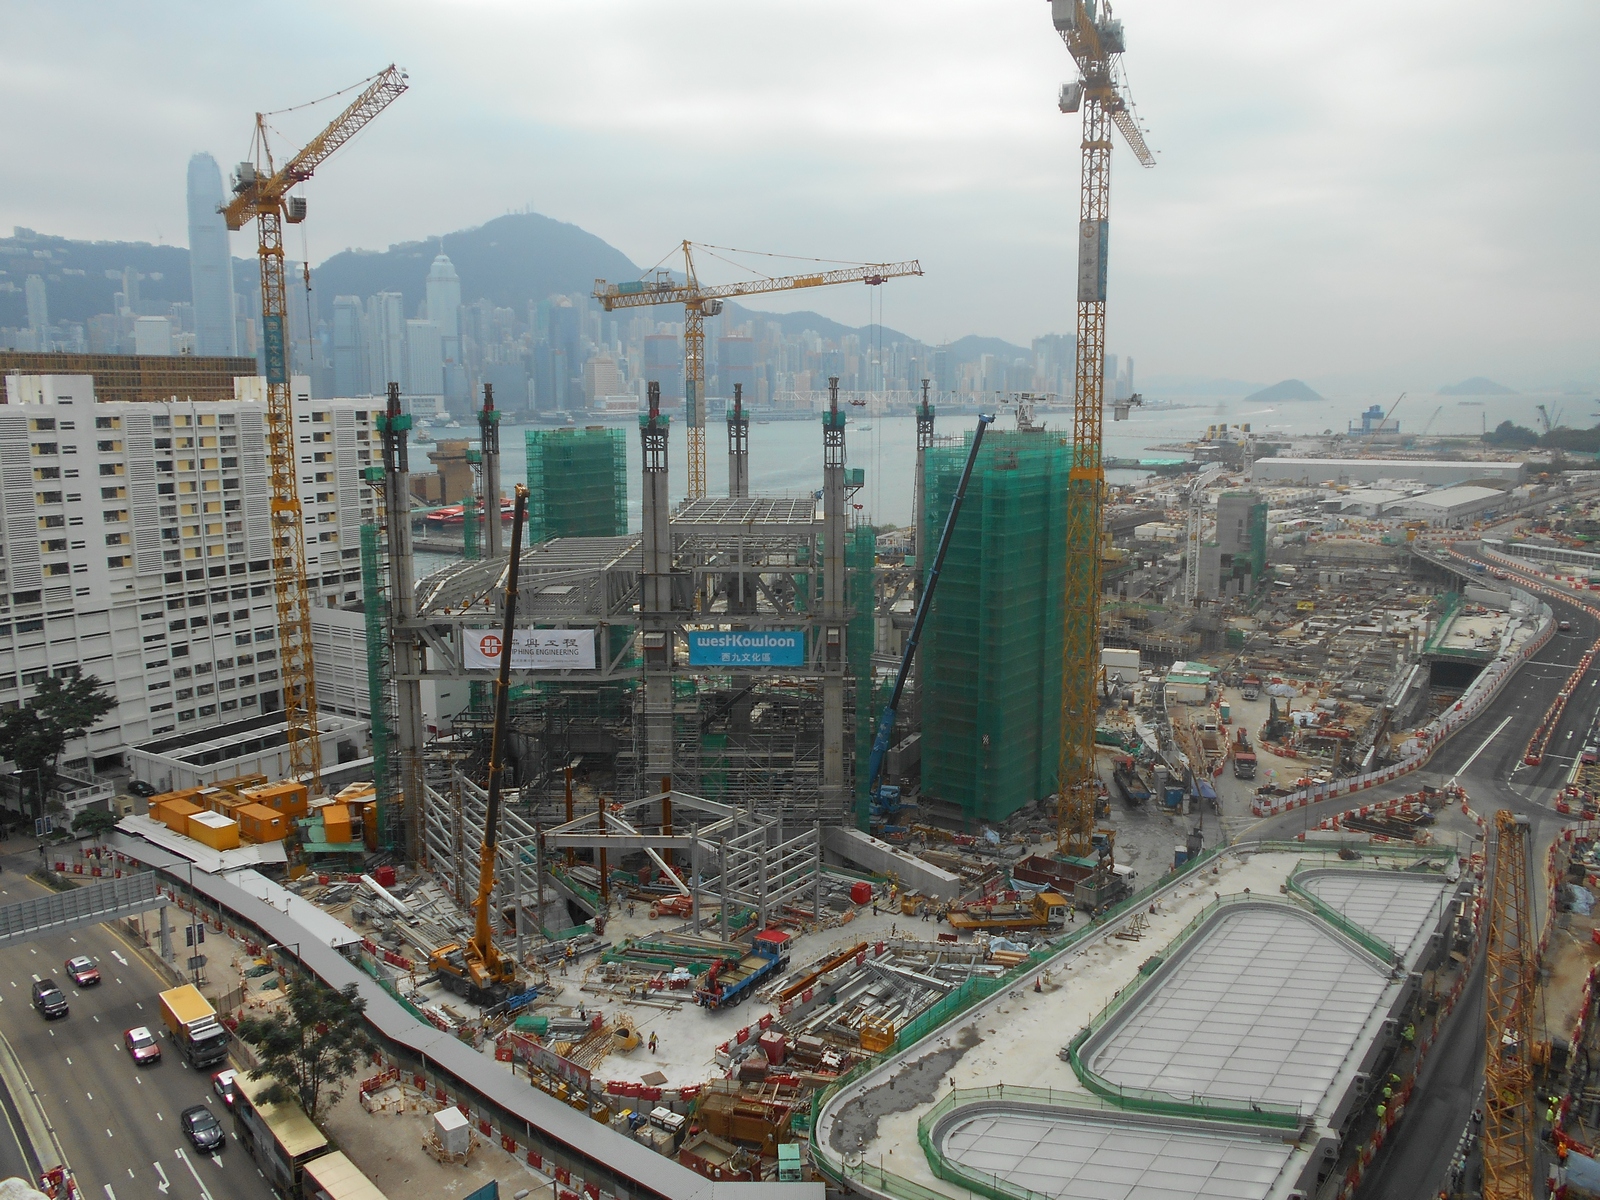 Birdview of the Xiqu Center construction site